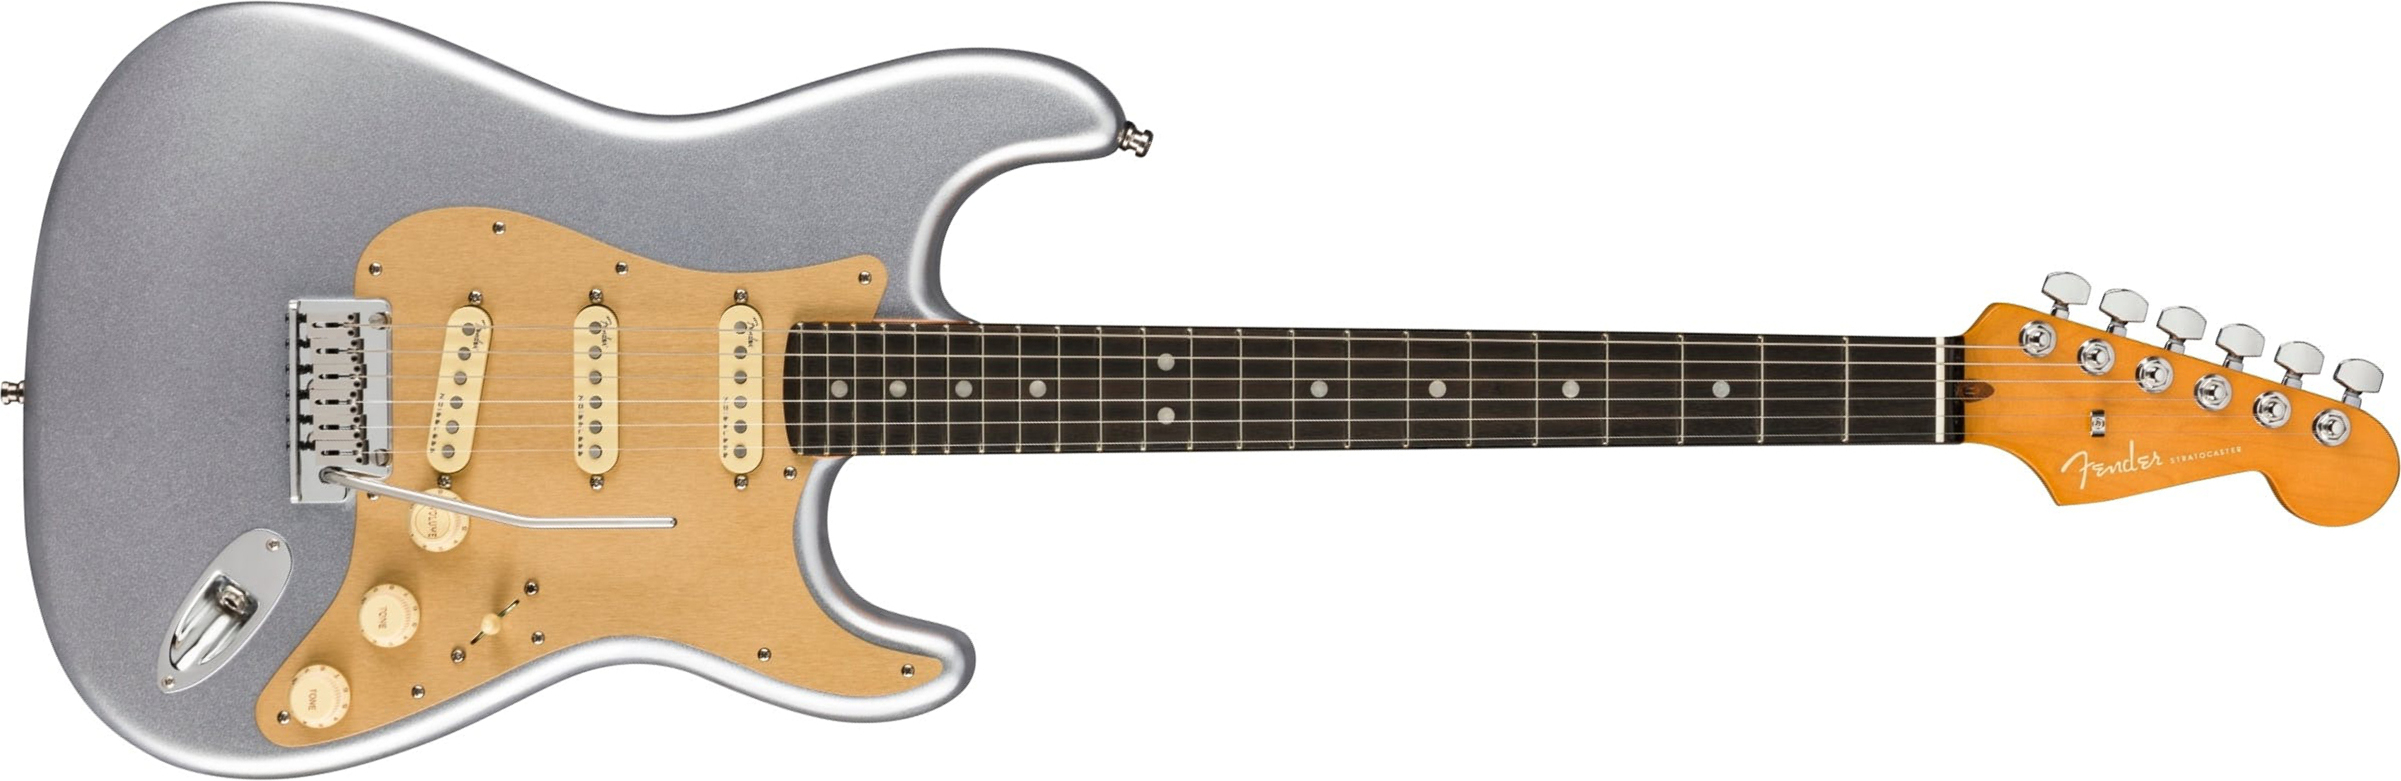 Fender Strat American Ultra Ltd Usa 3s Trem Eb - Quicksilver - Guitarra eléctrica con forma de str. - Main picture